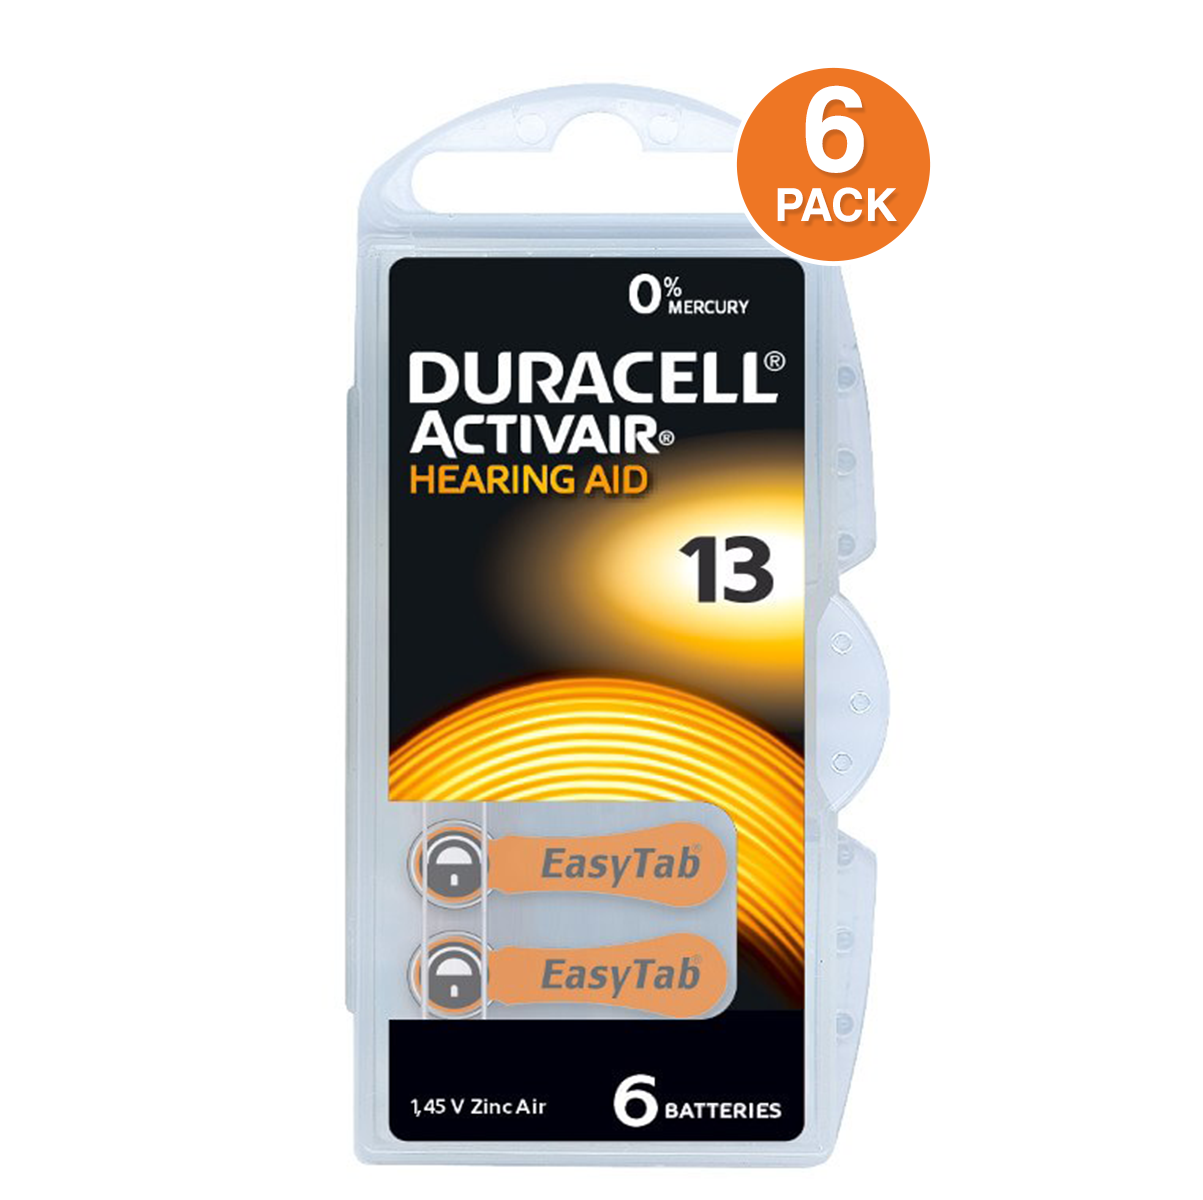 Duracell Activair 13 Hearing Aid Battery, 6 Pcs - Mercury Free